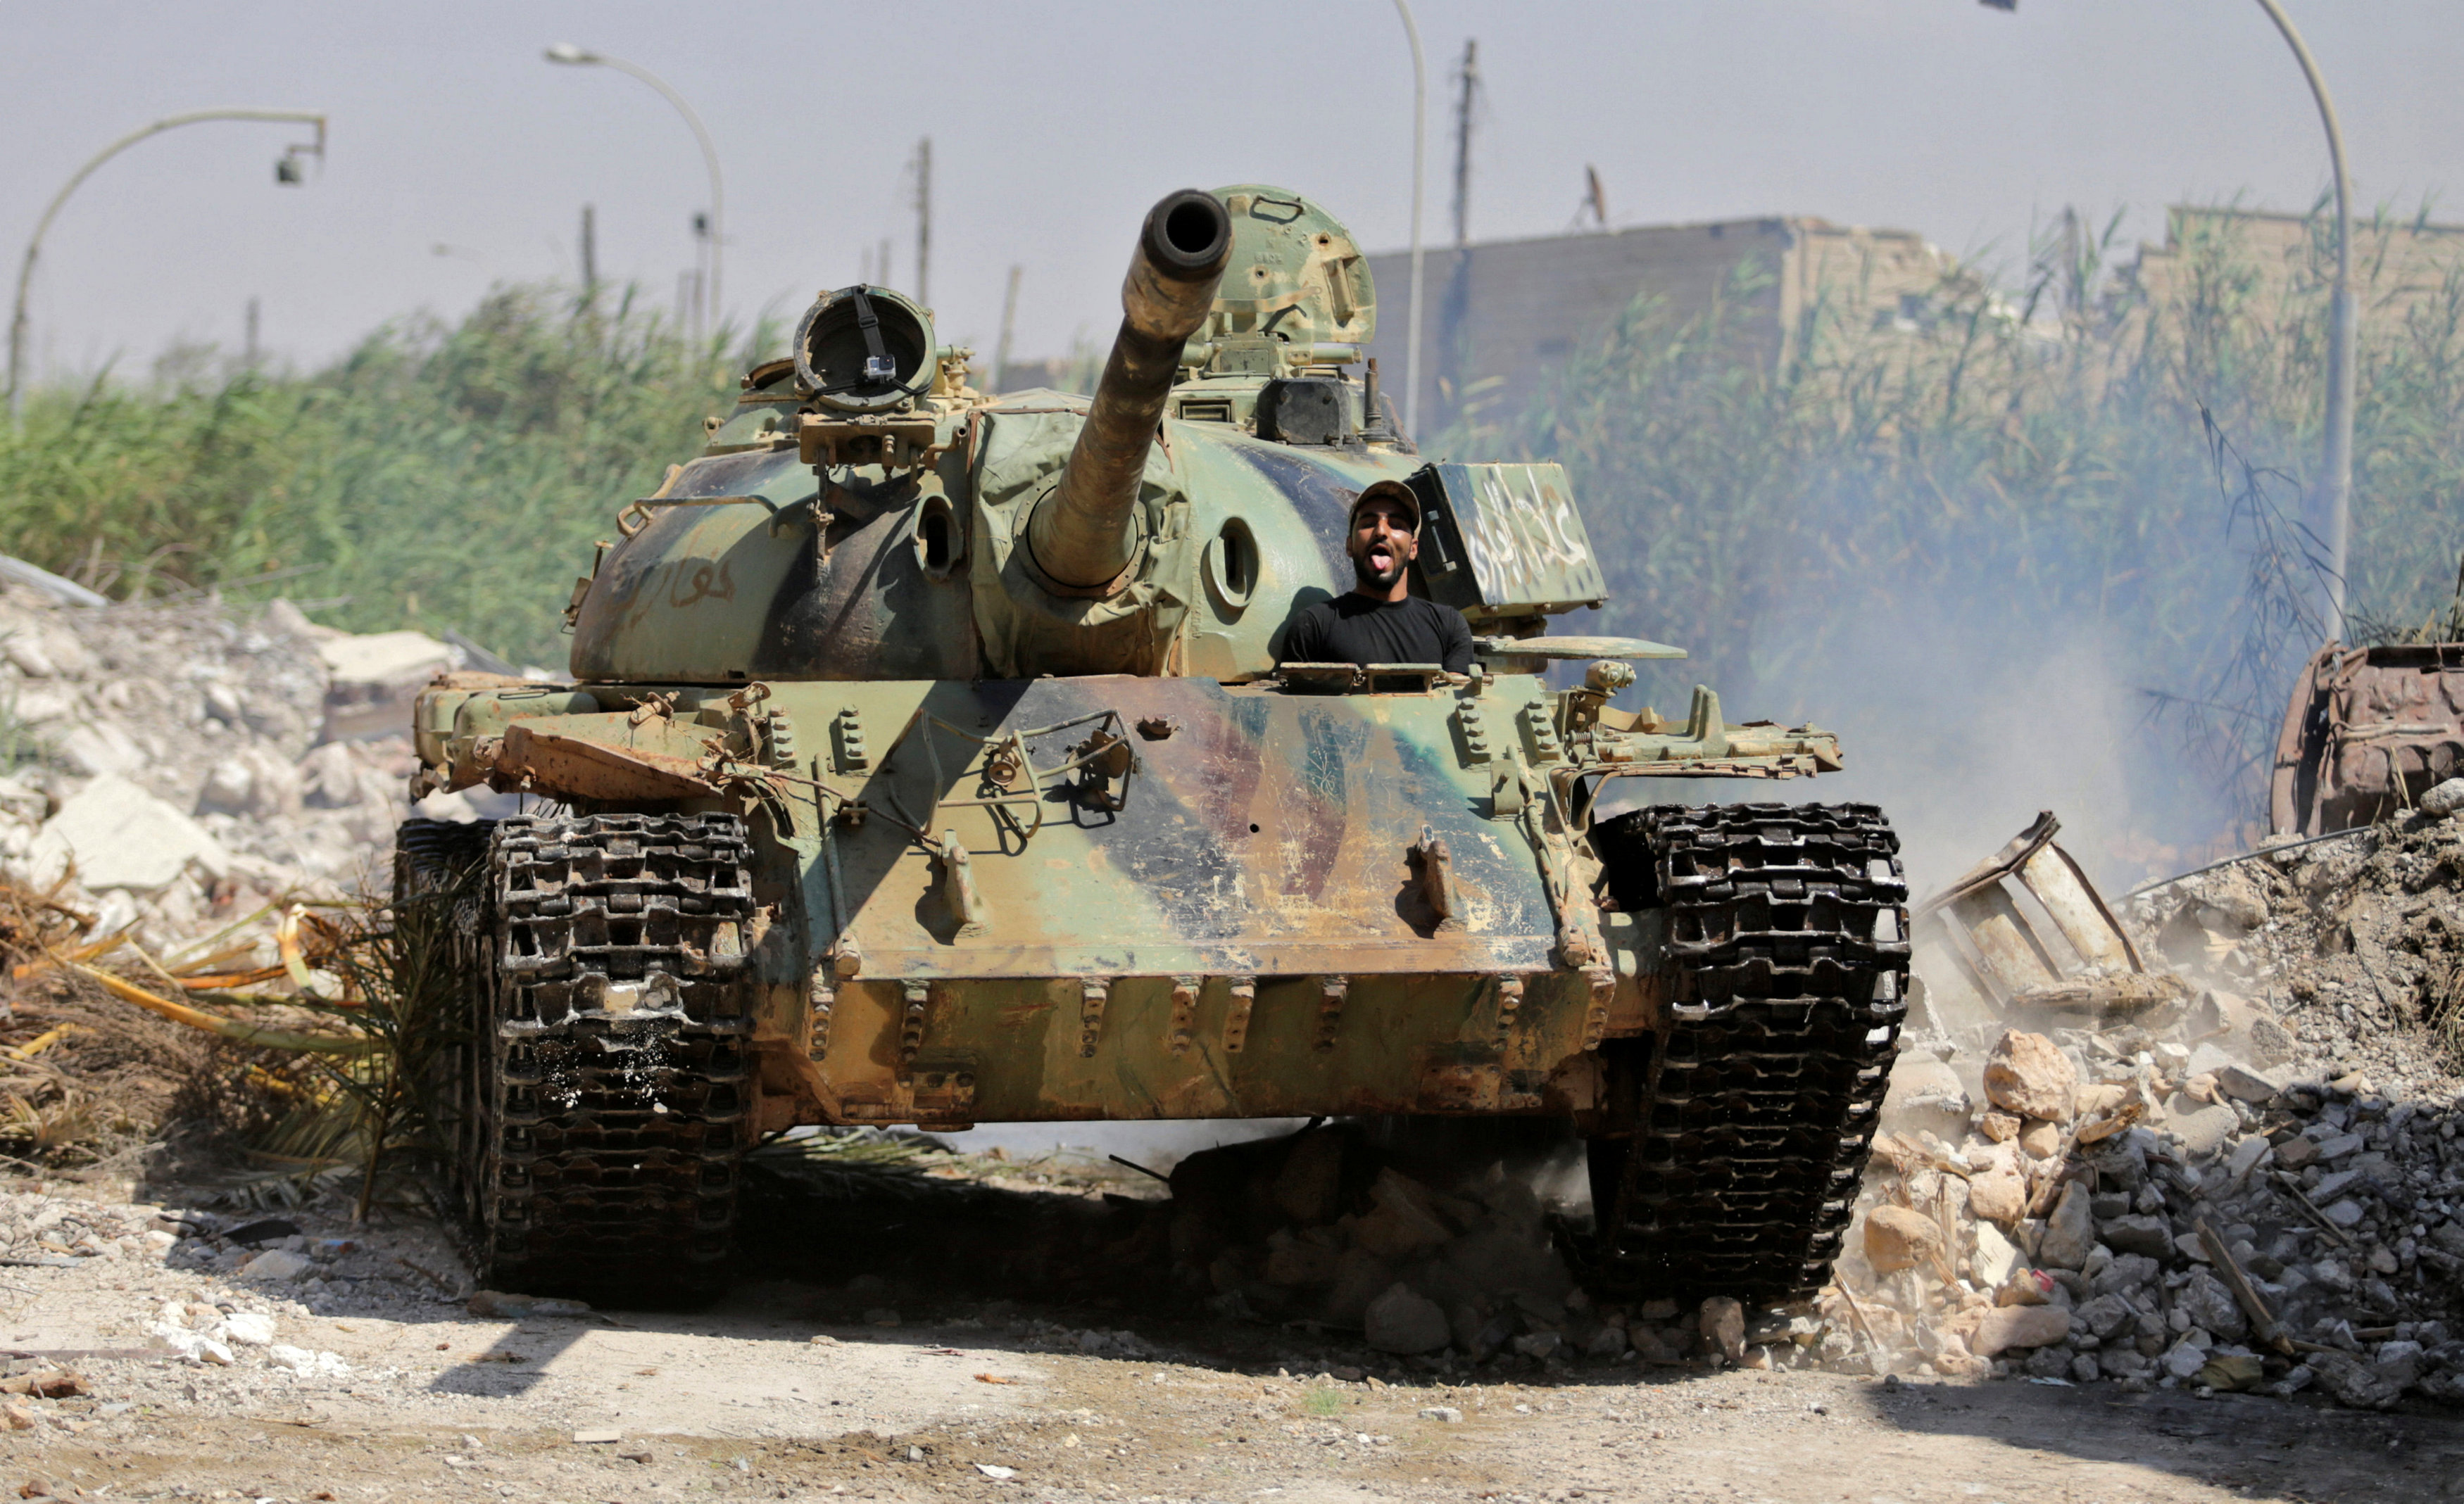 Eastern commander's forces battle resistance in Libya's Benghazi